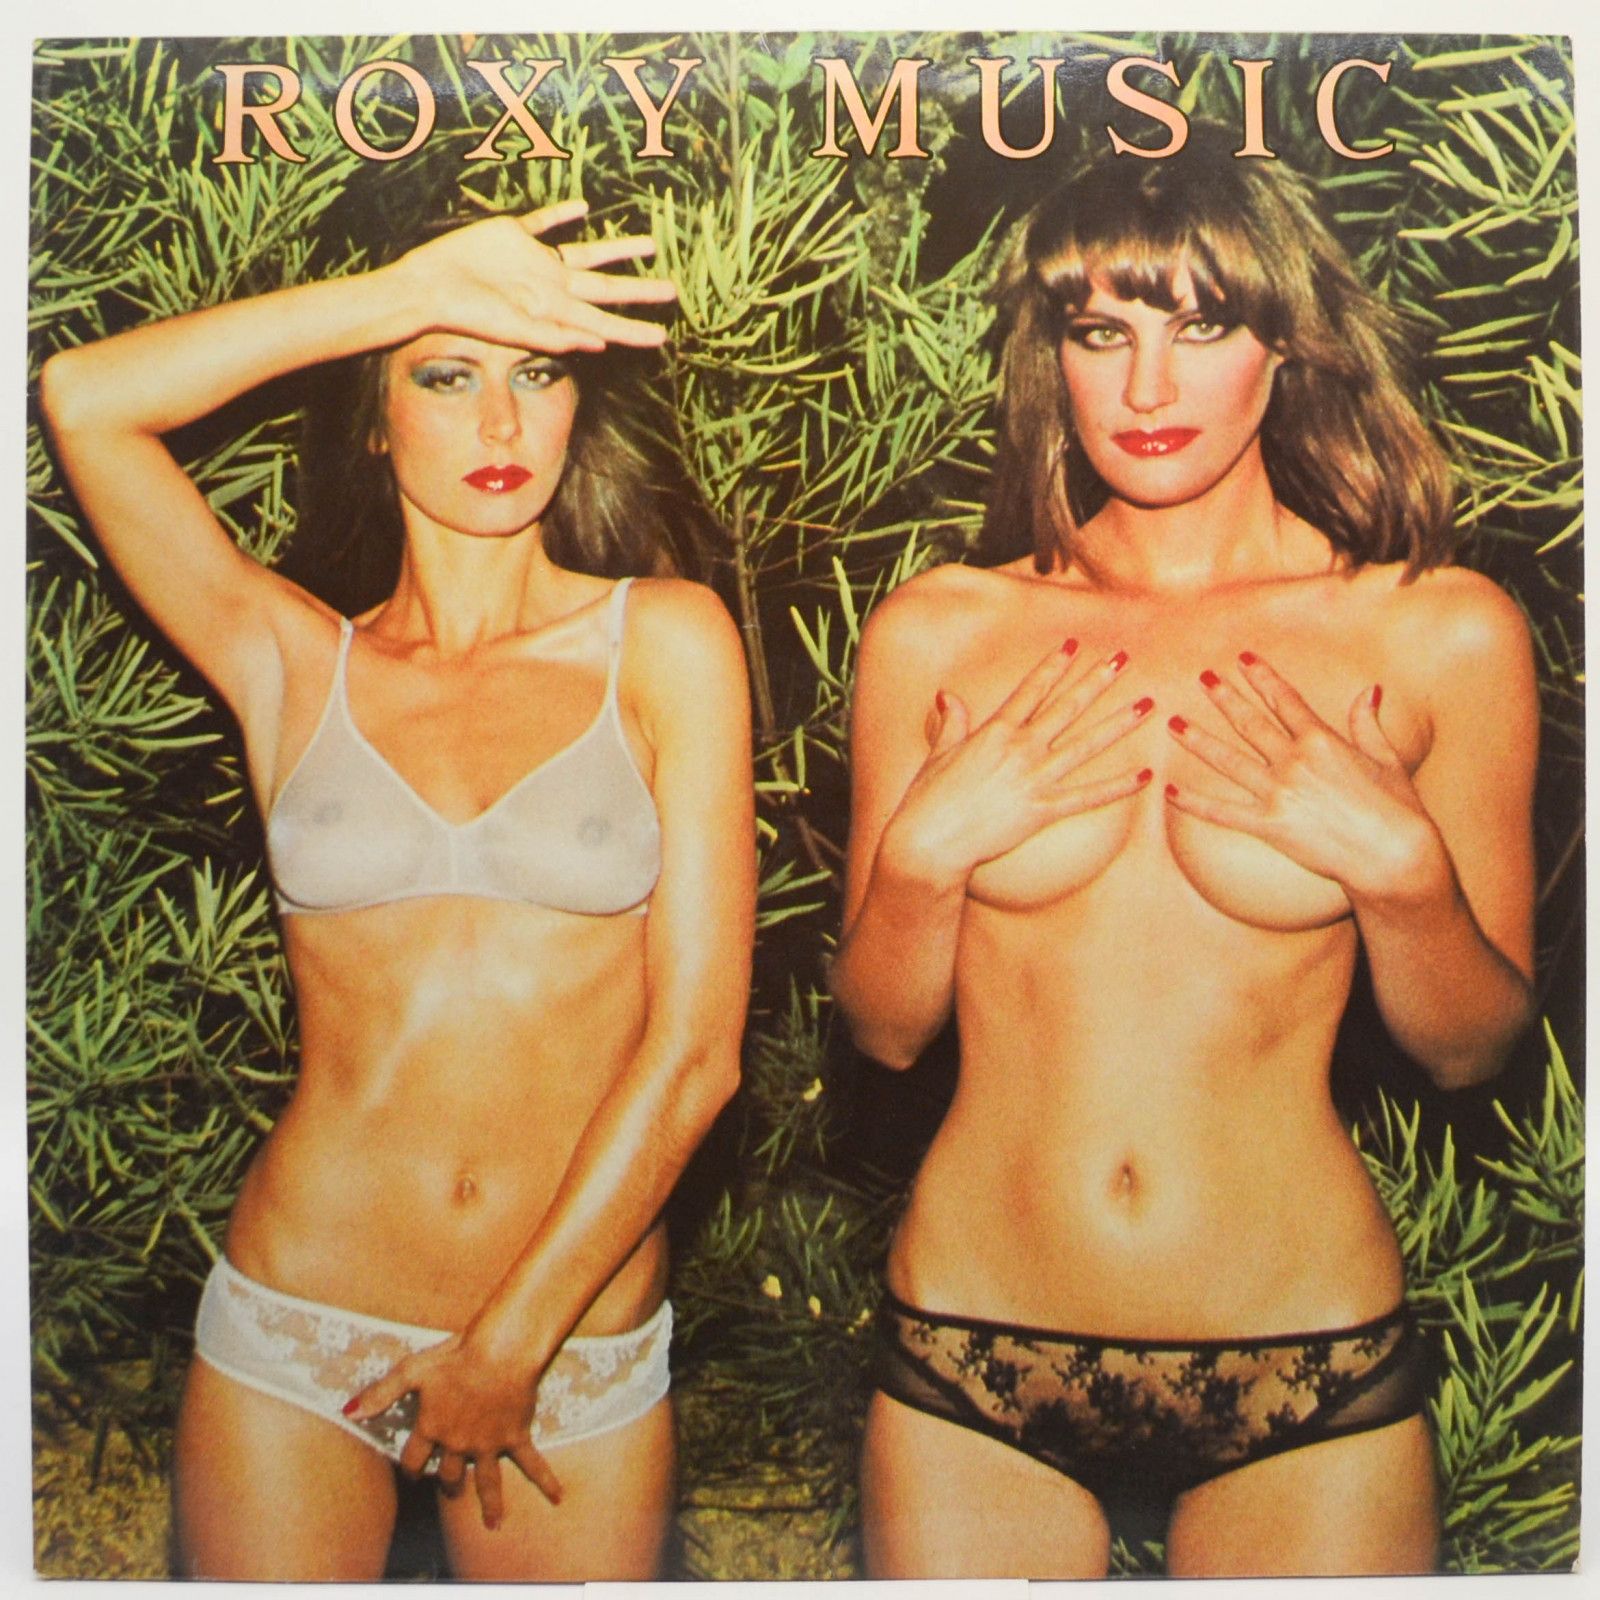 Roxy Music — Country Life (The 4th Roxy Music Album), 1974